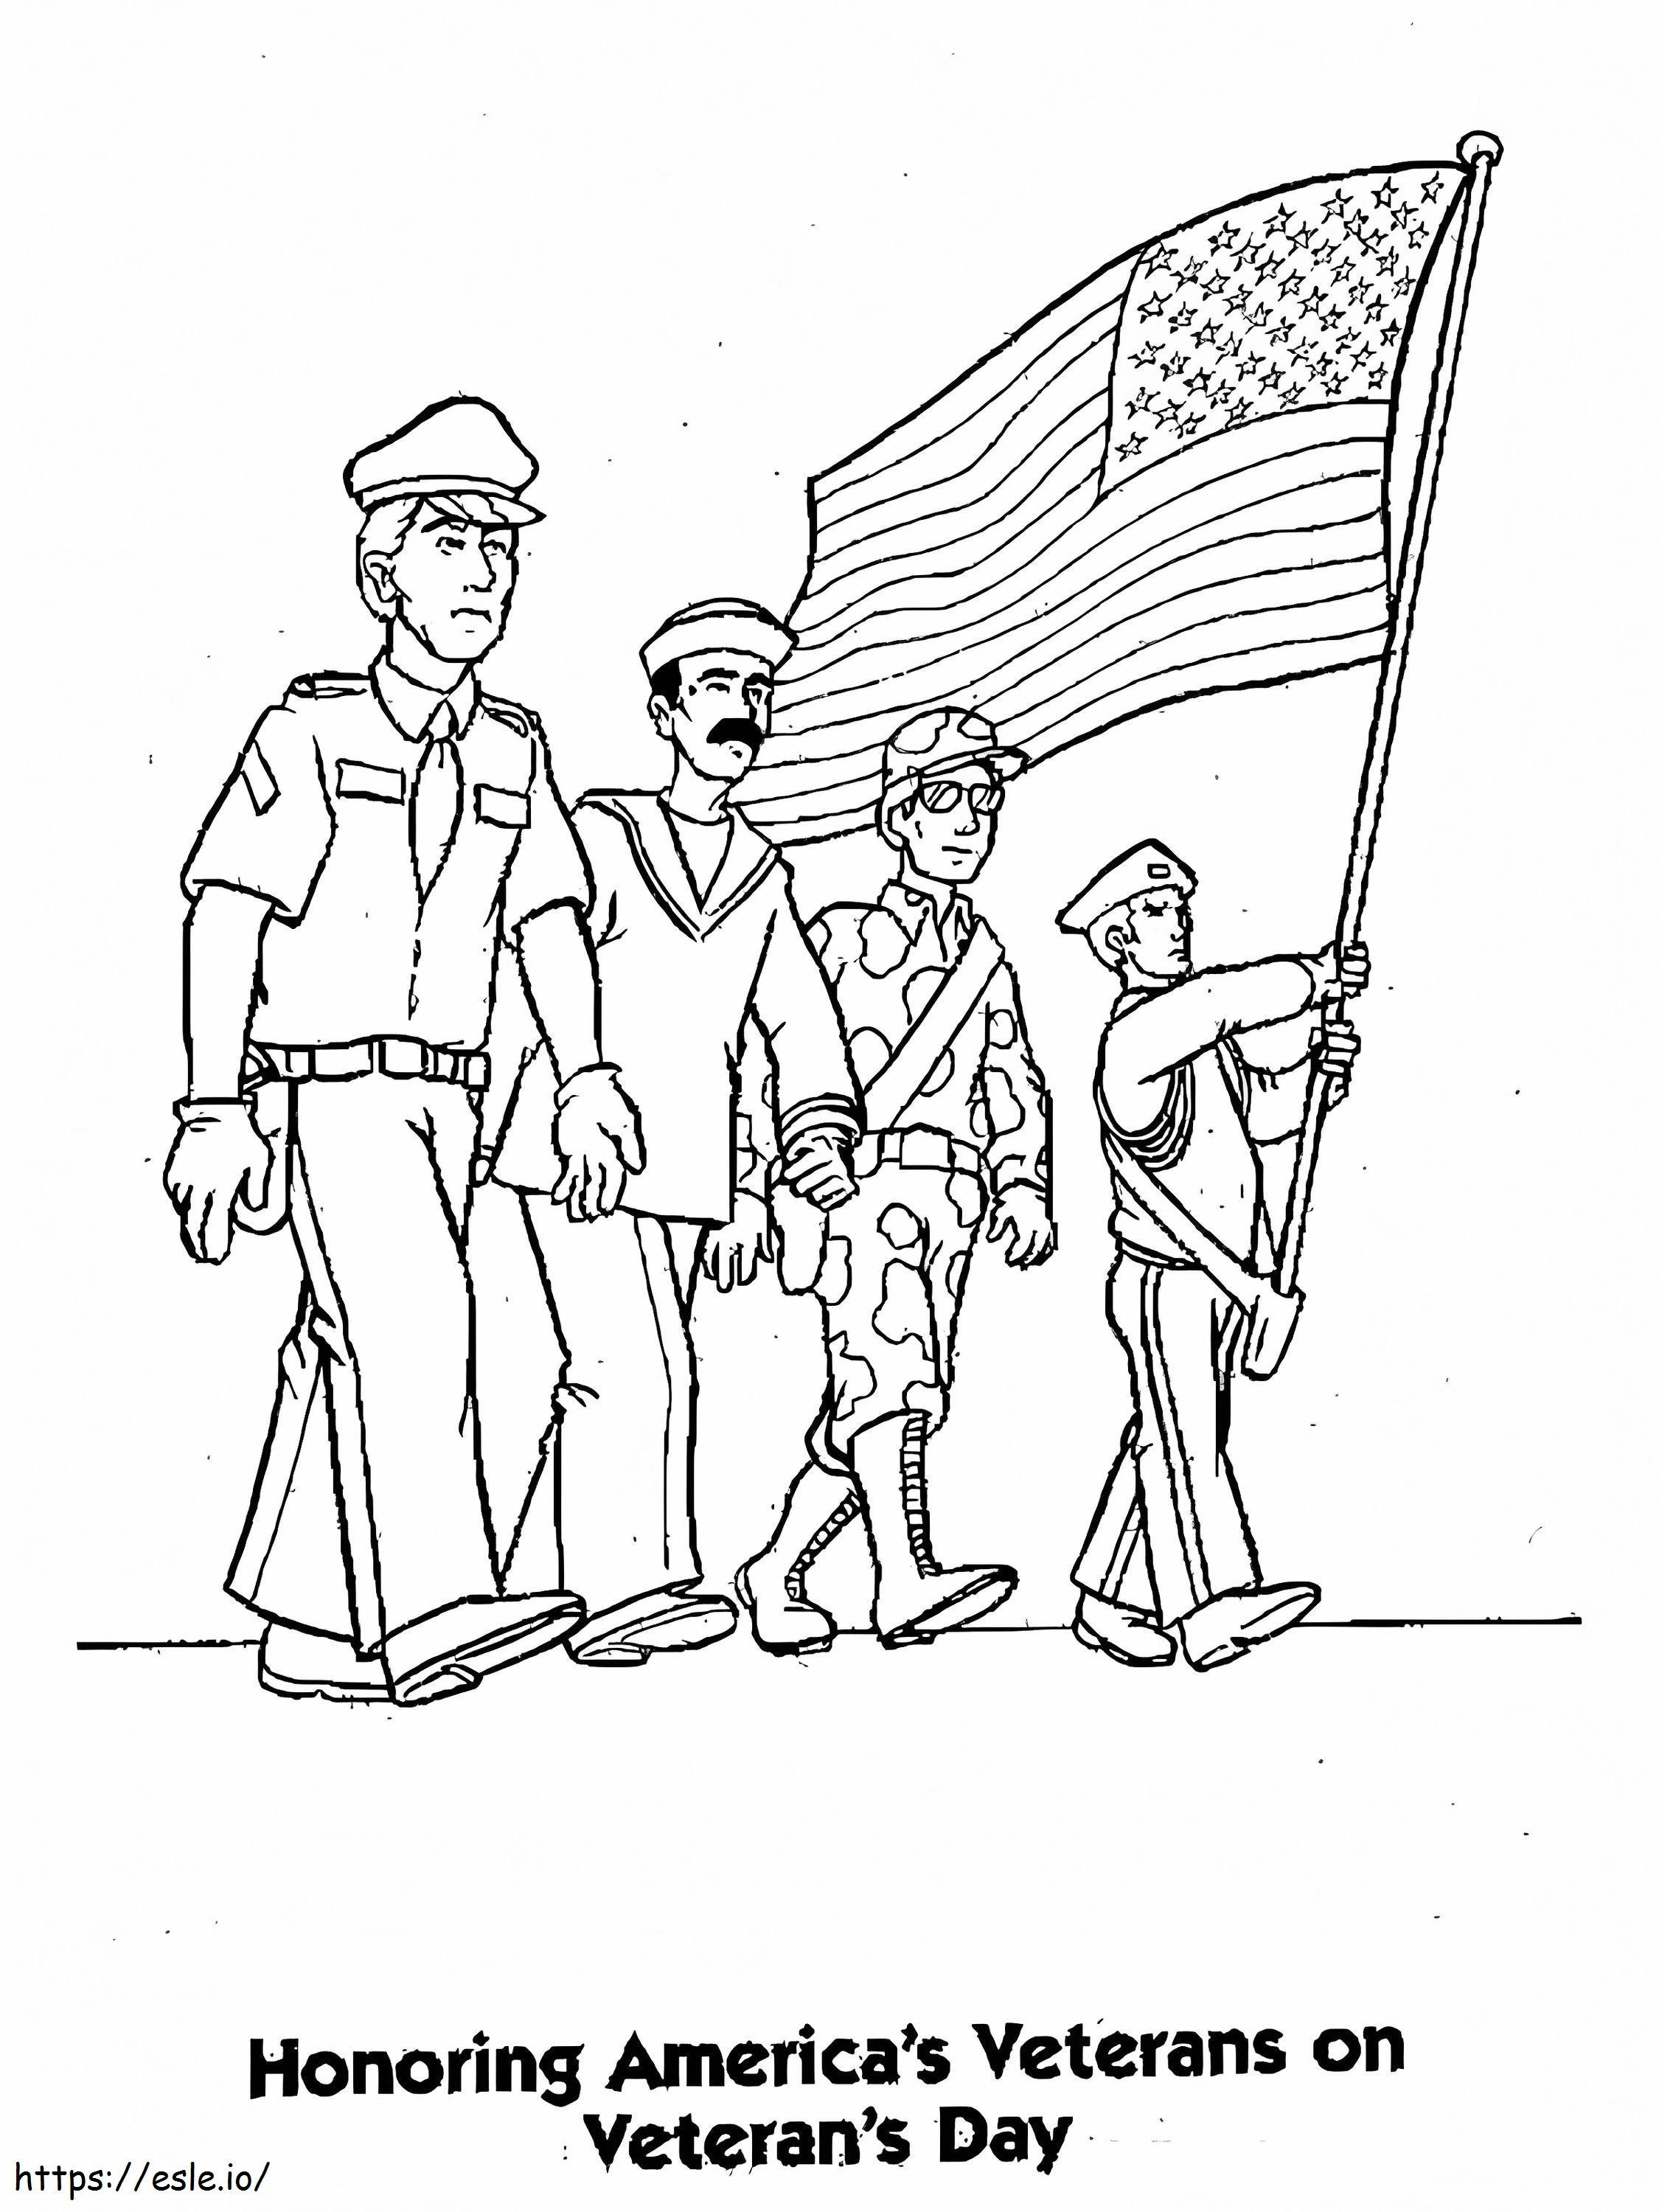 Americas Veterans coloring page